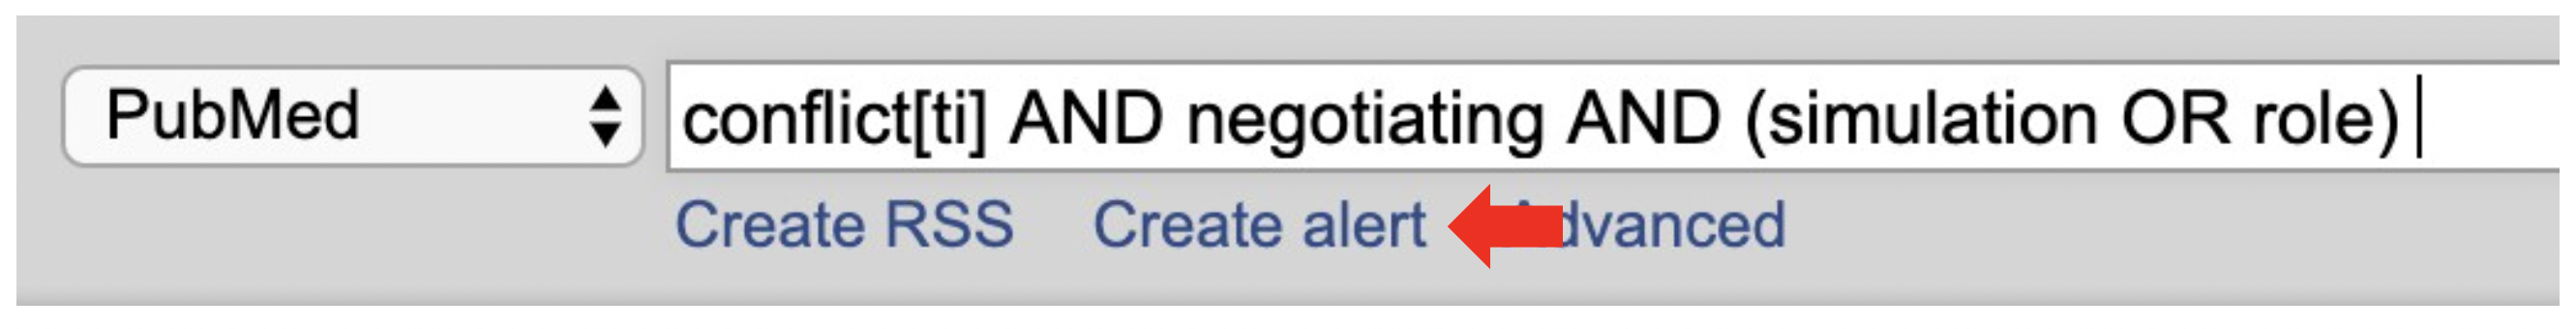 Create alert in PubMed